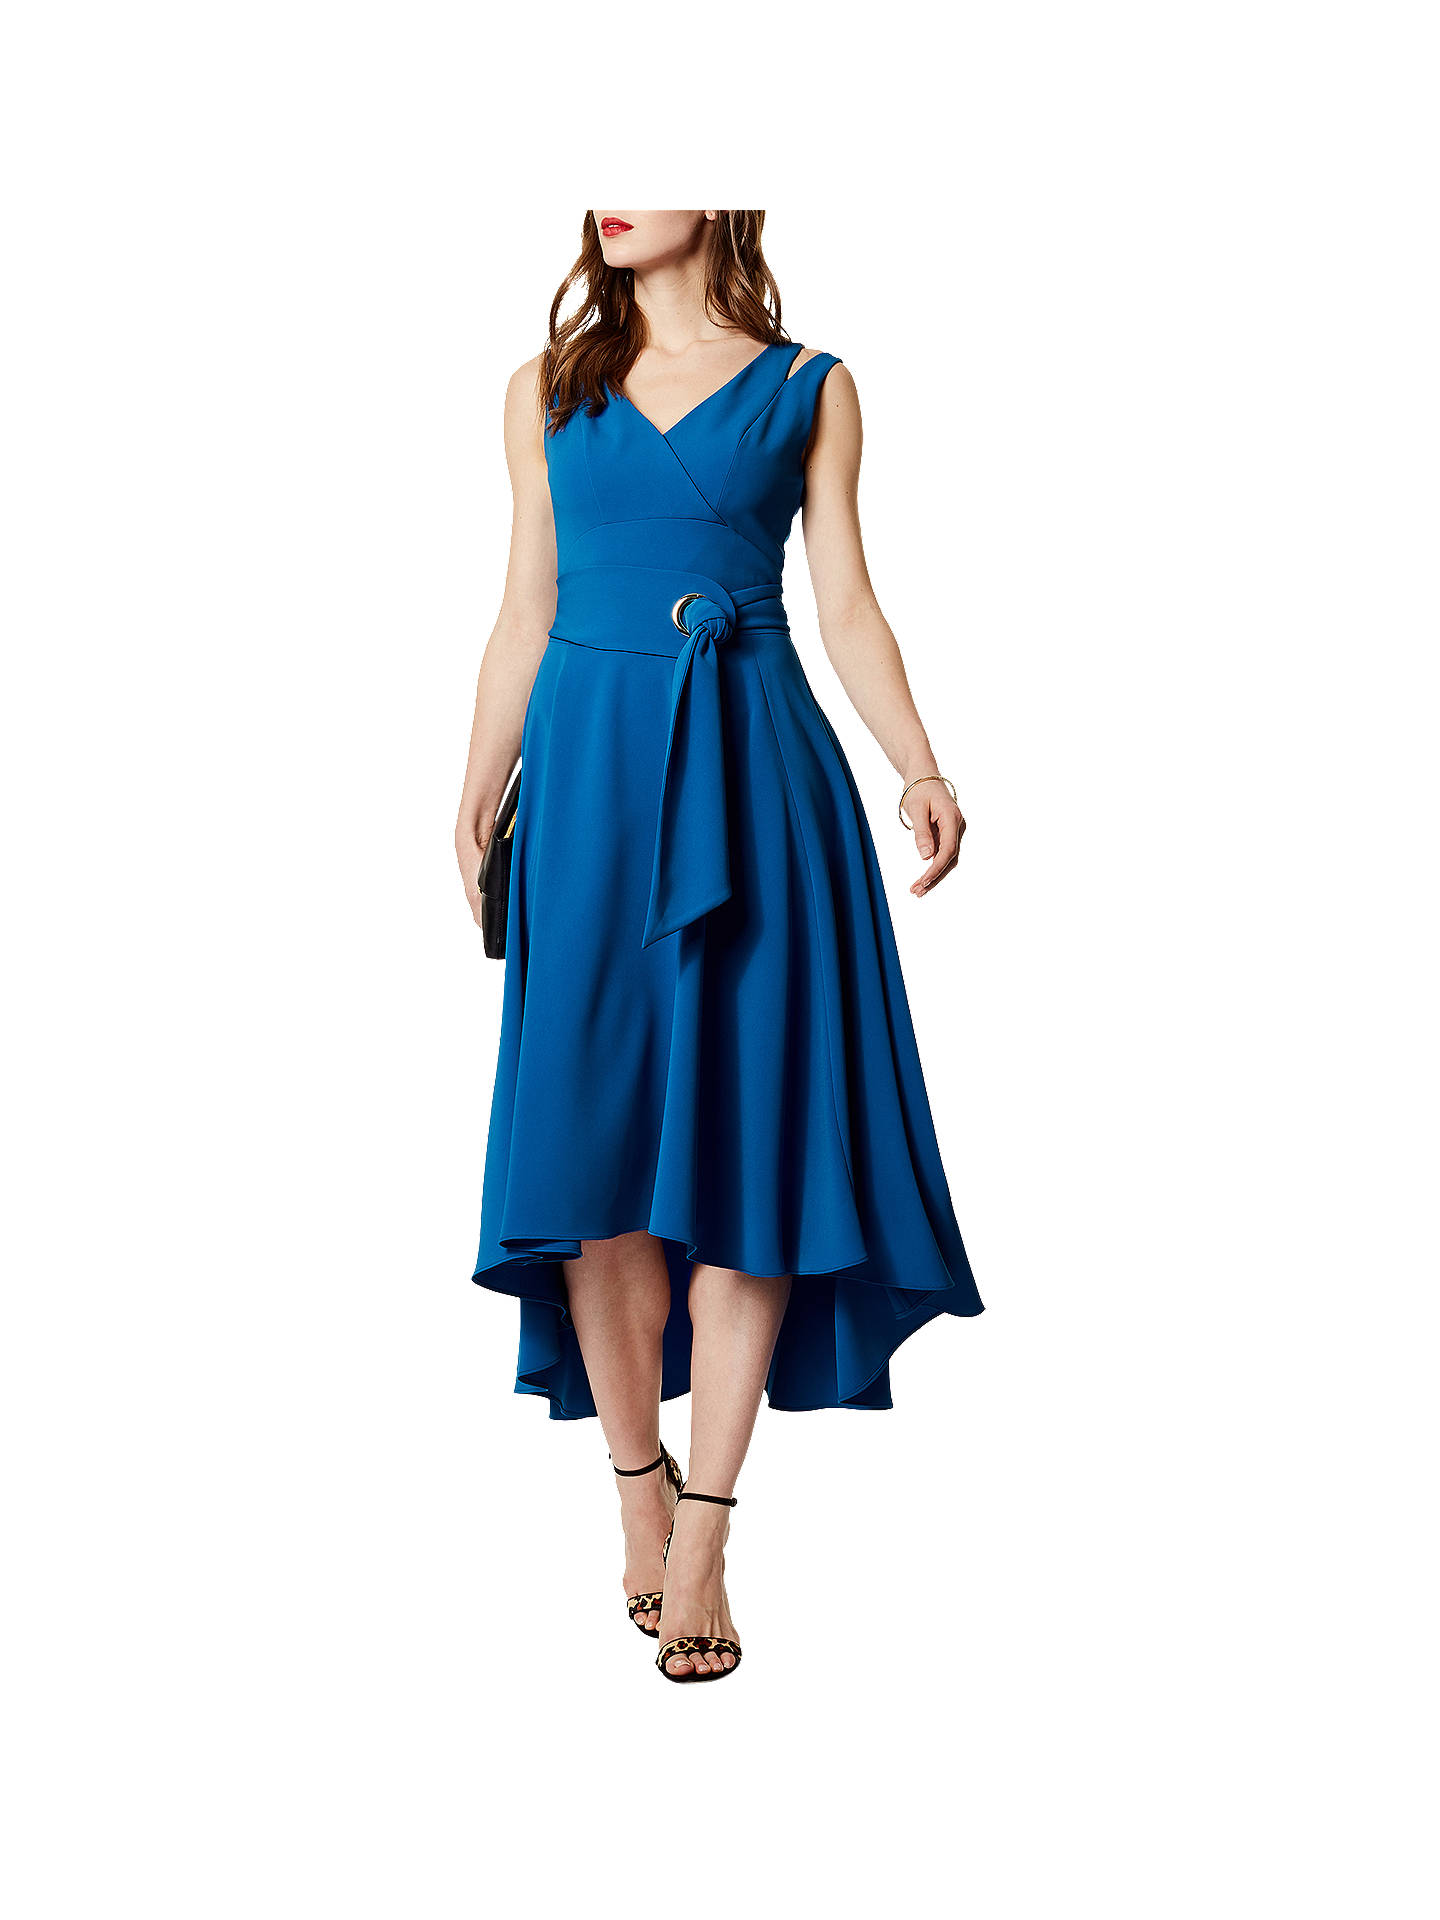 Karen Millen Belted Dress, Blue at John Lewis & Partners